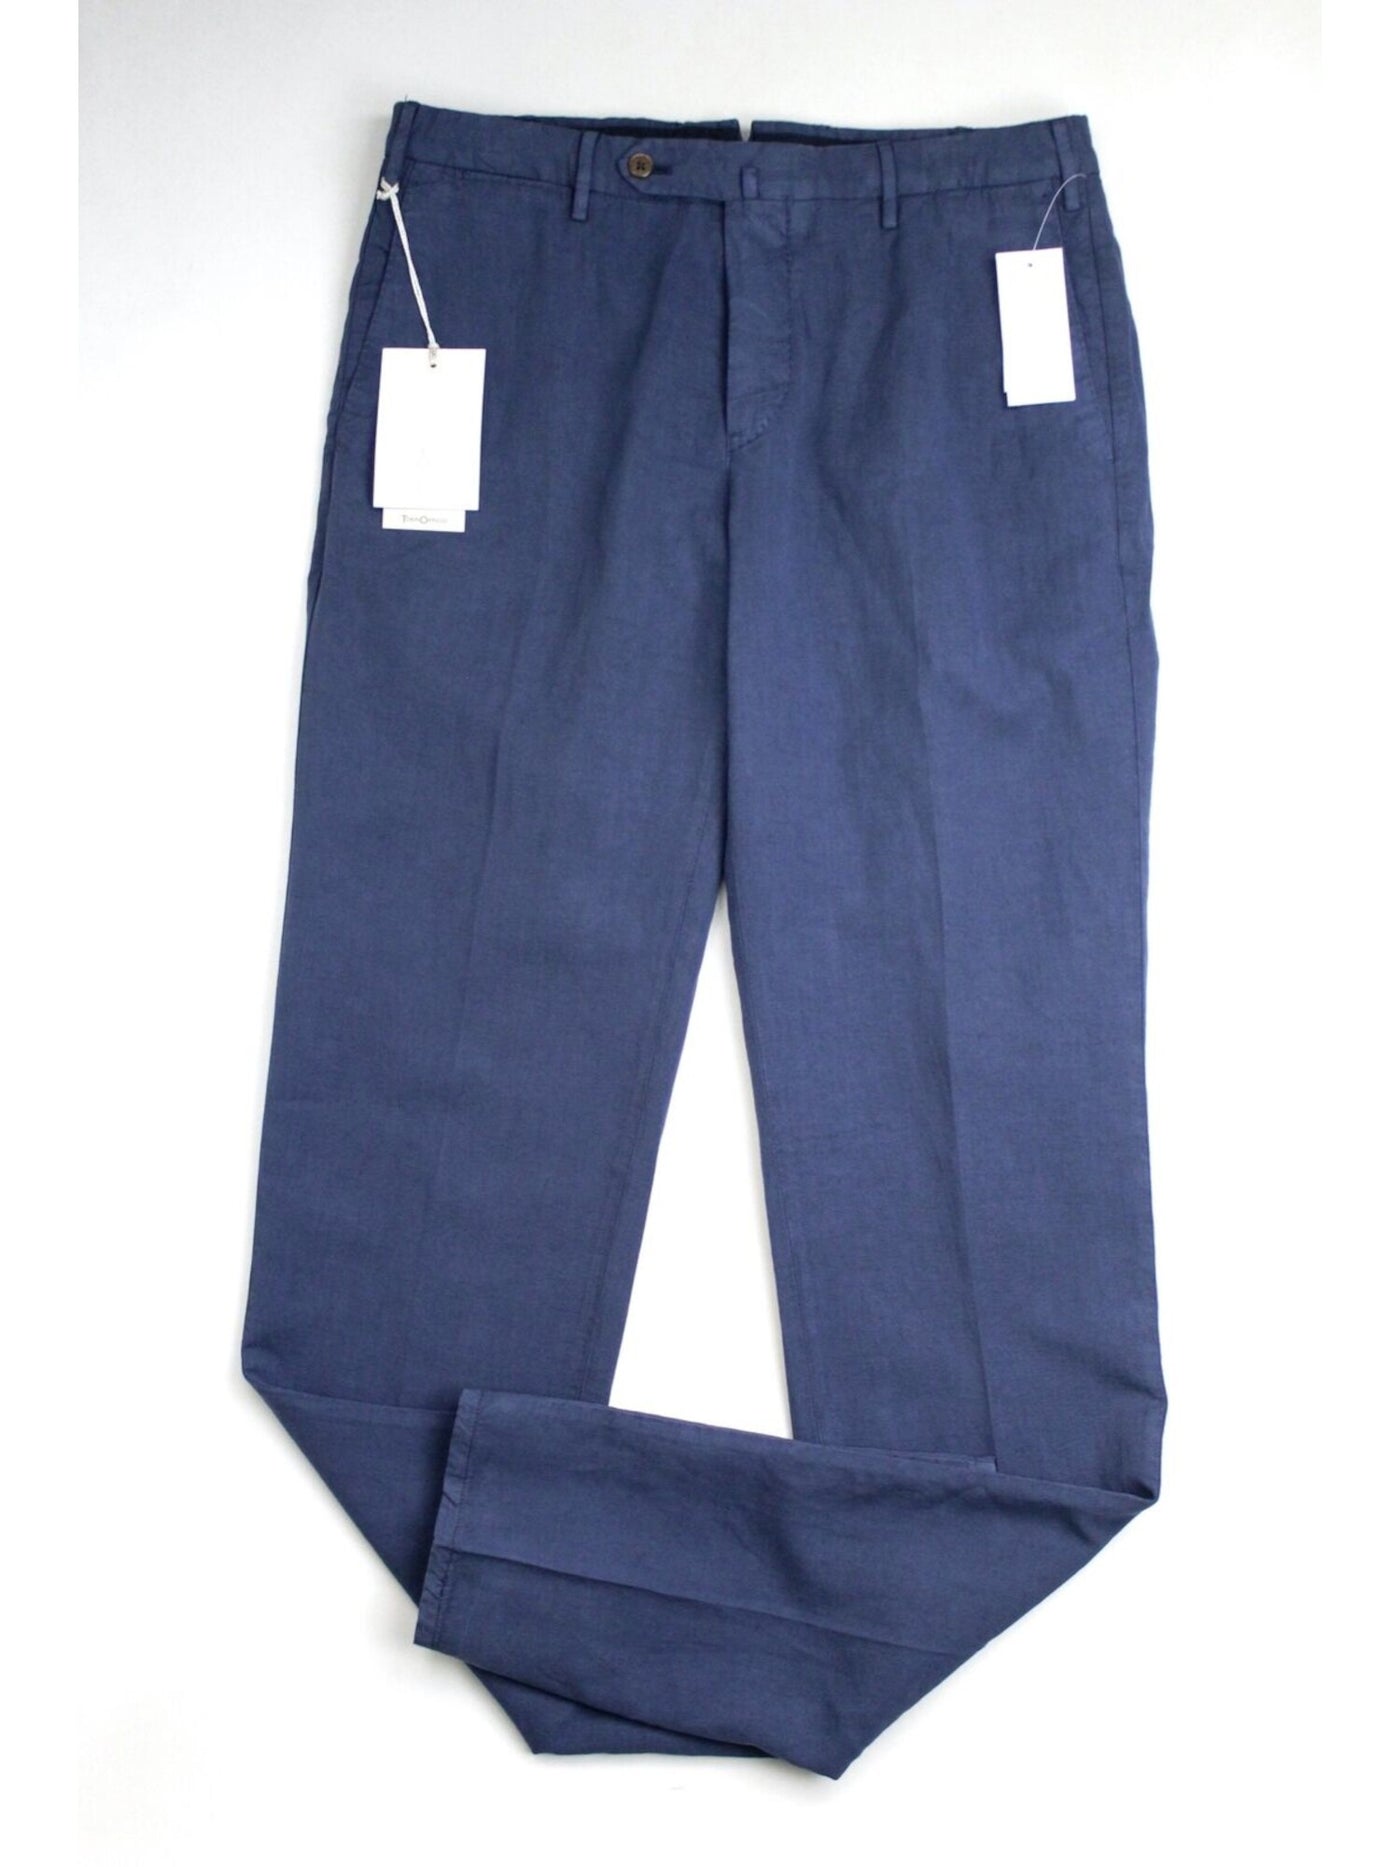 TORIN OPIFICIO Mens Blue Regular Fit Pants 50